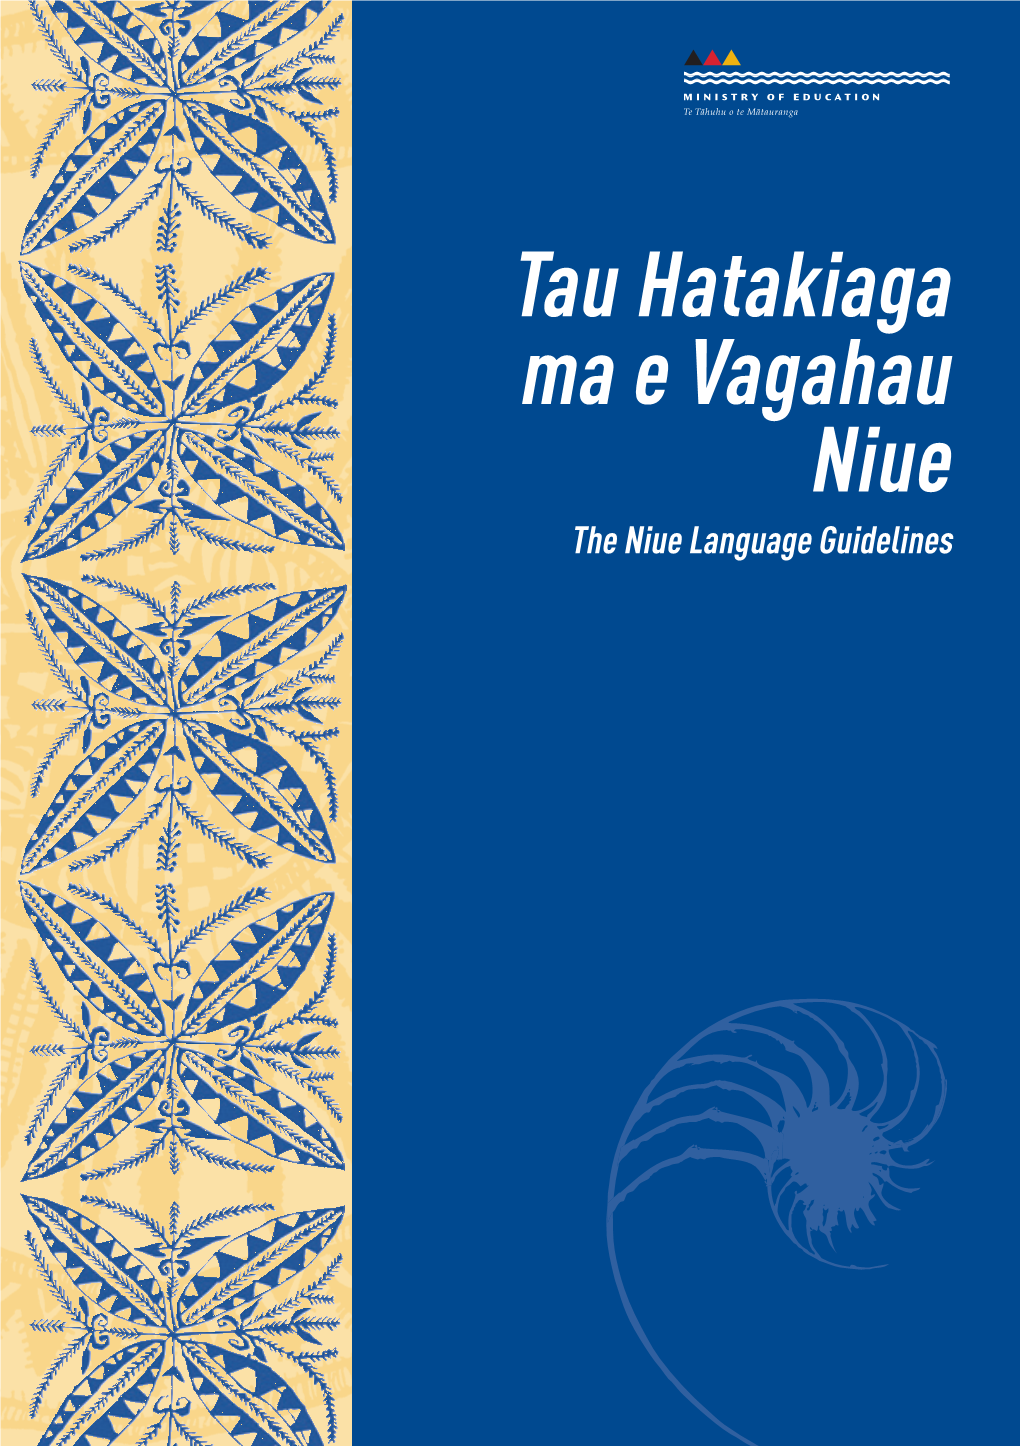 The Niue Language Guidelines